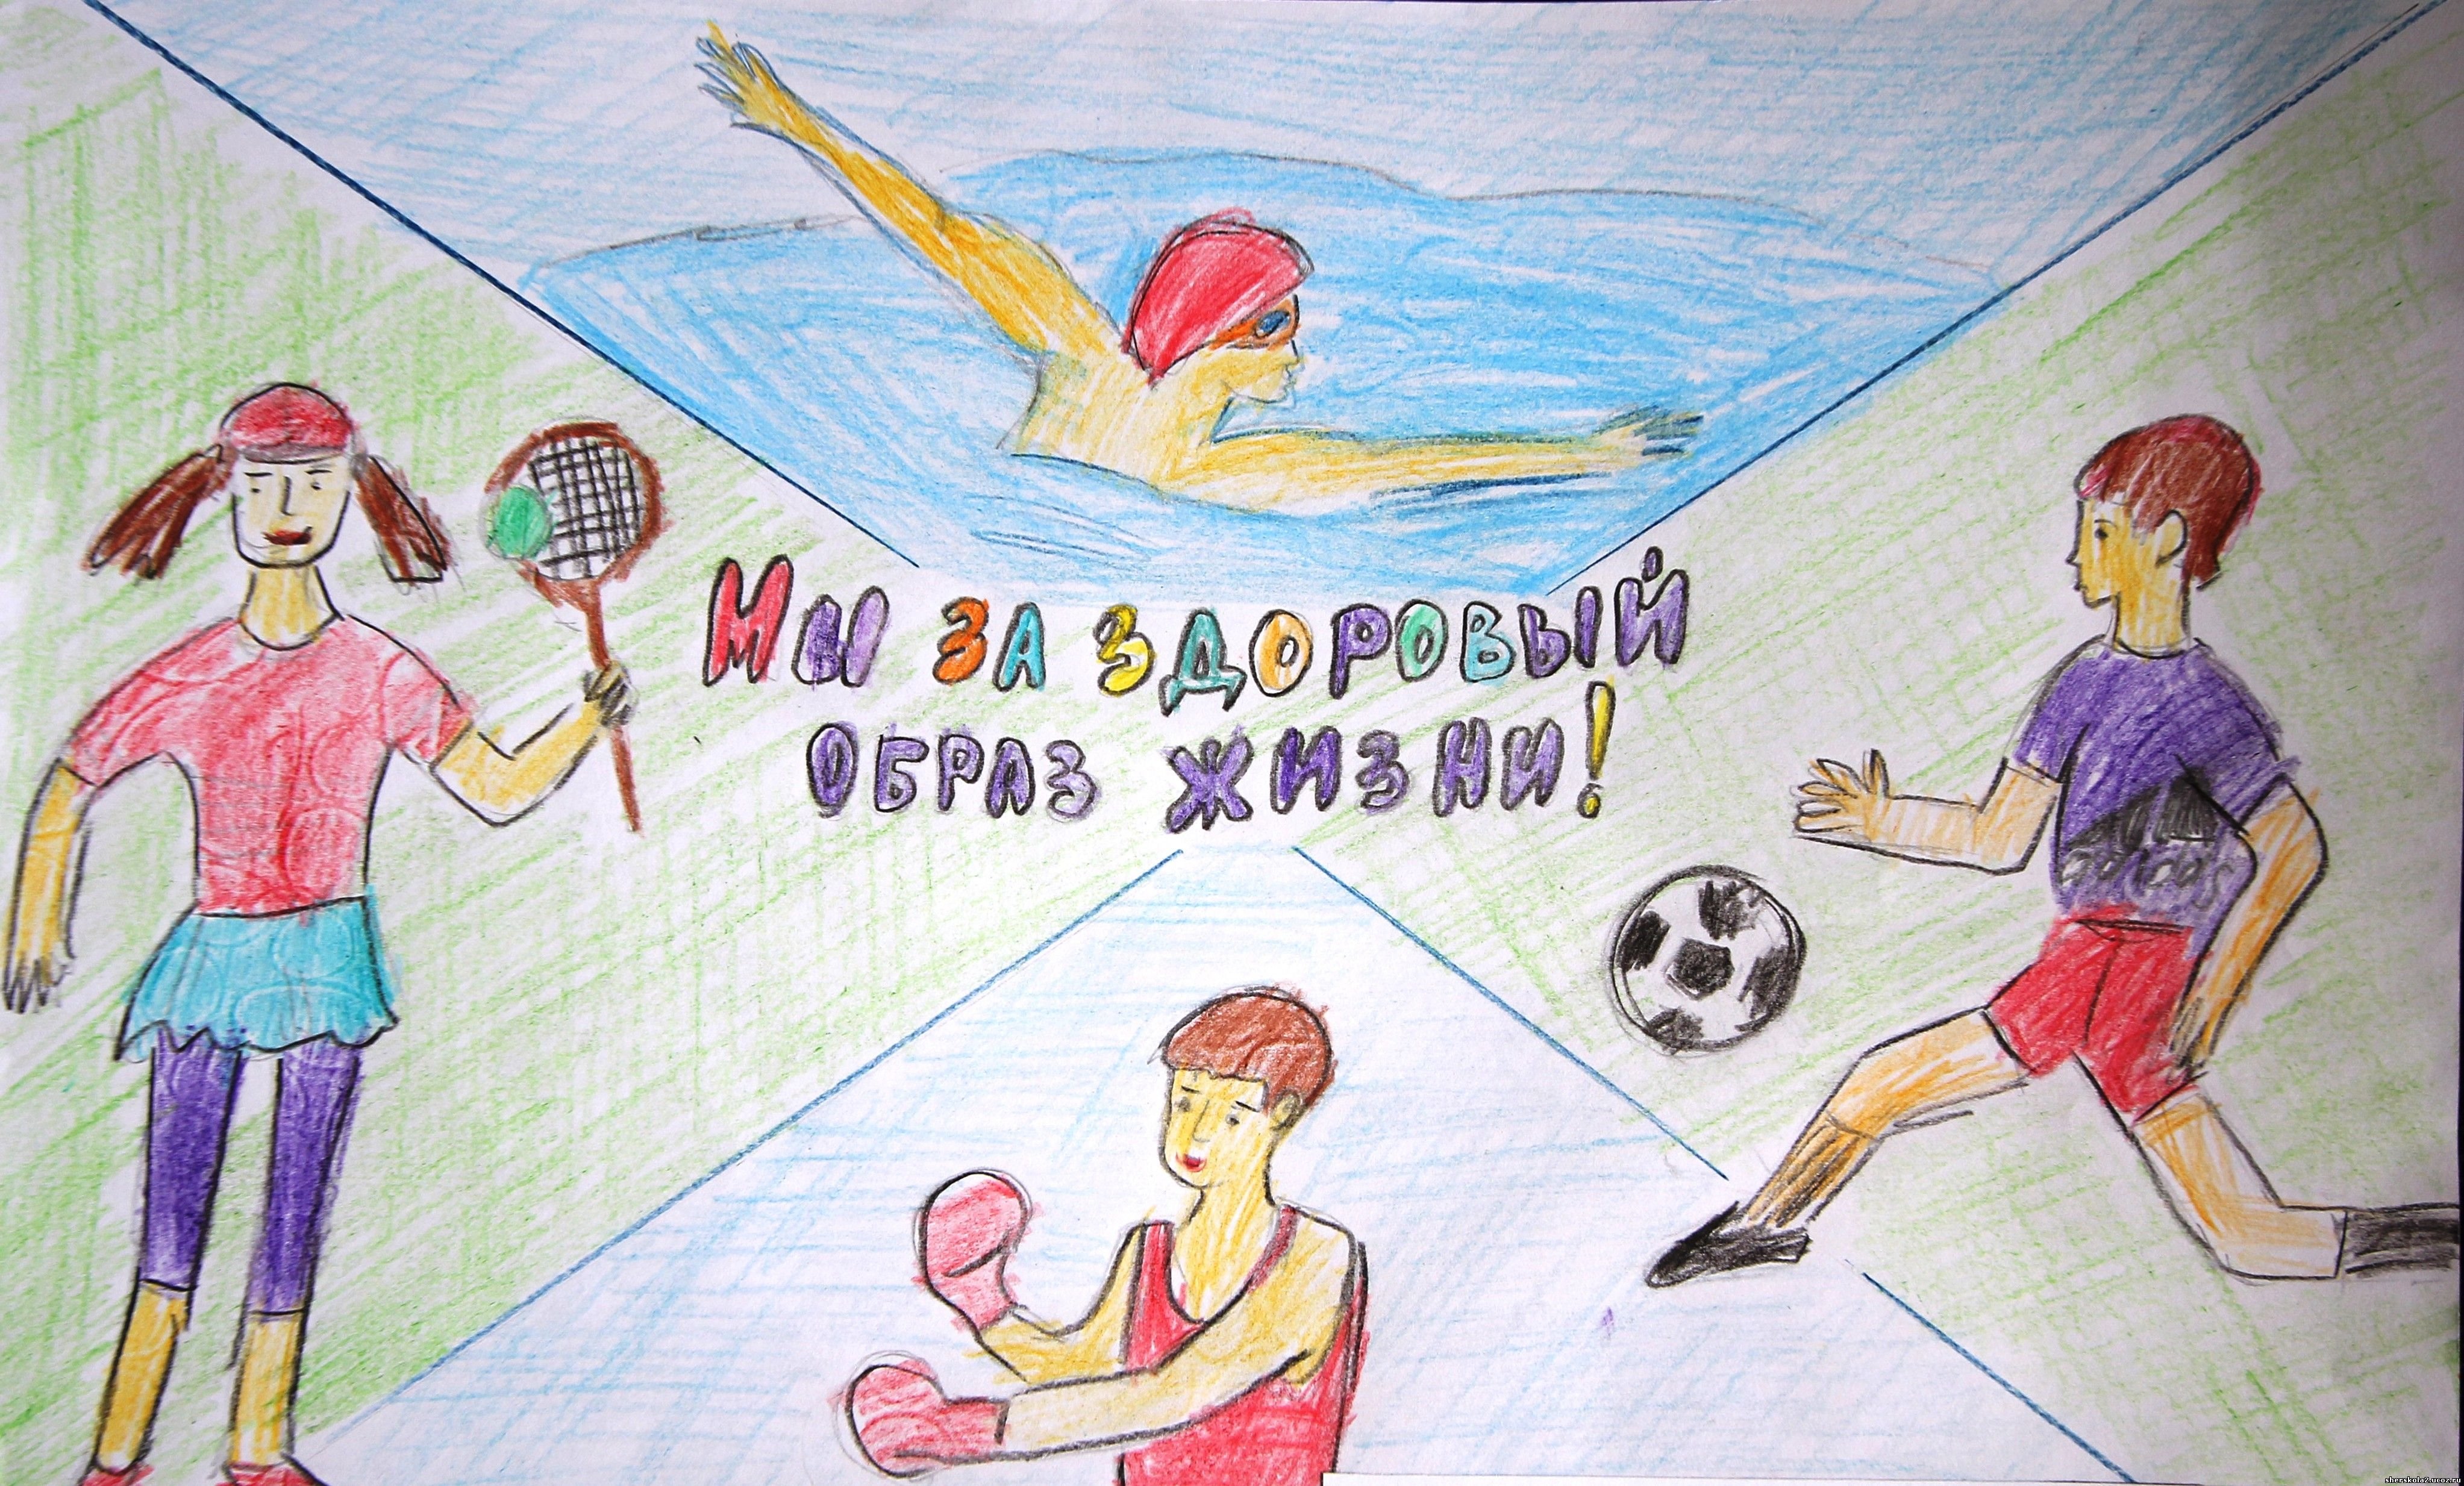 Тема спорт моей жизни. Рисунок на тему спорт. Конкурс рисунков на спортивную тему. Рисунки на тему спорт глазами детей. Рисунок на тему физкультура.